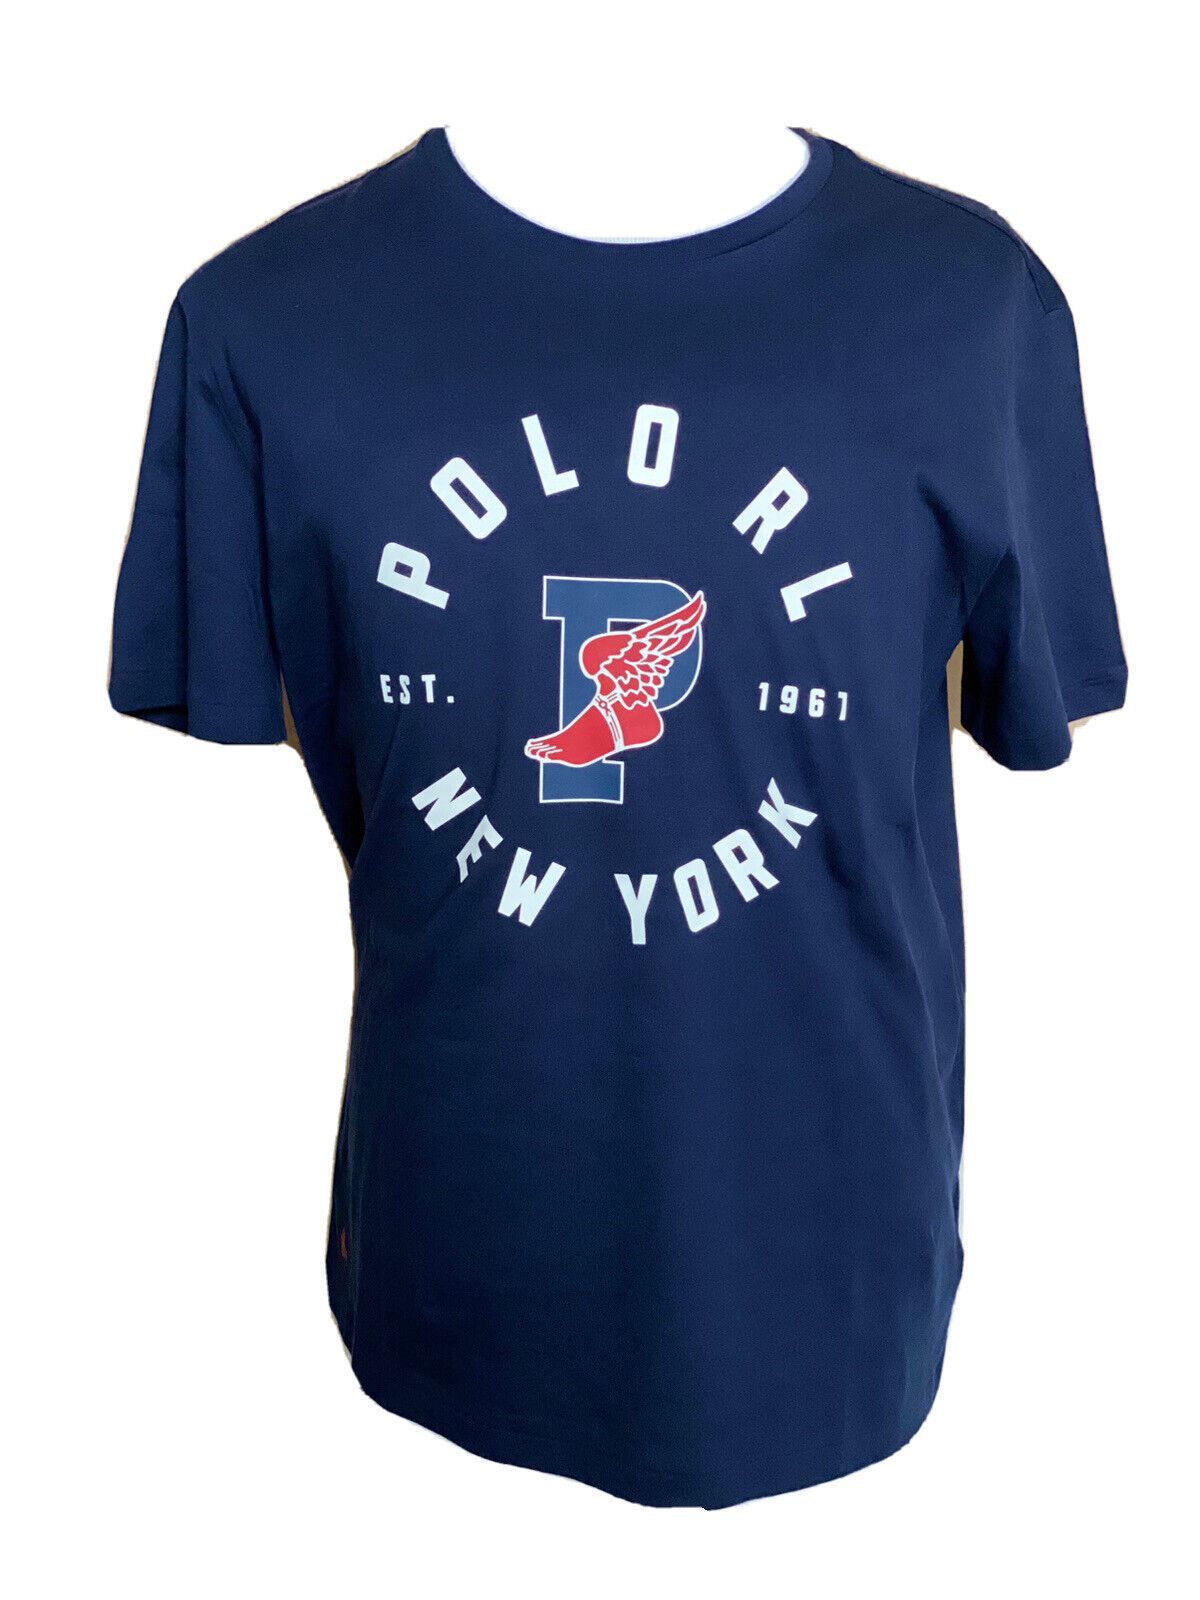 Neu mit Etikett: Polo Ralph Lauren NY P-Wing Kurzarm-Logo-T-Shirt, Blau, Größe L 